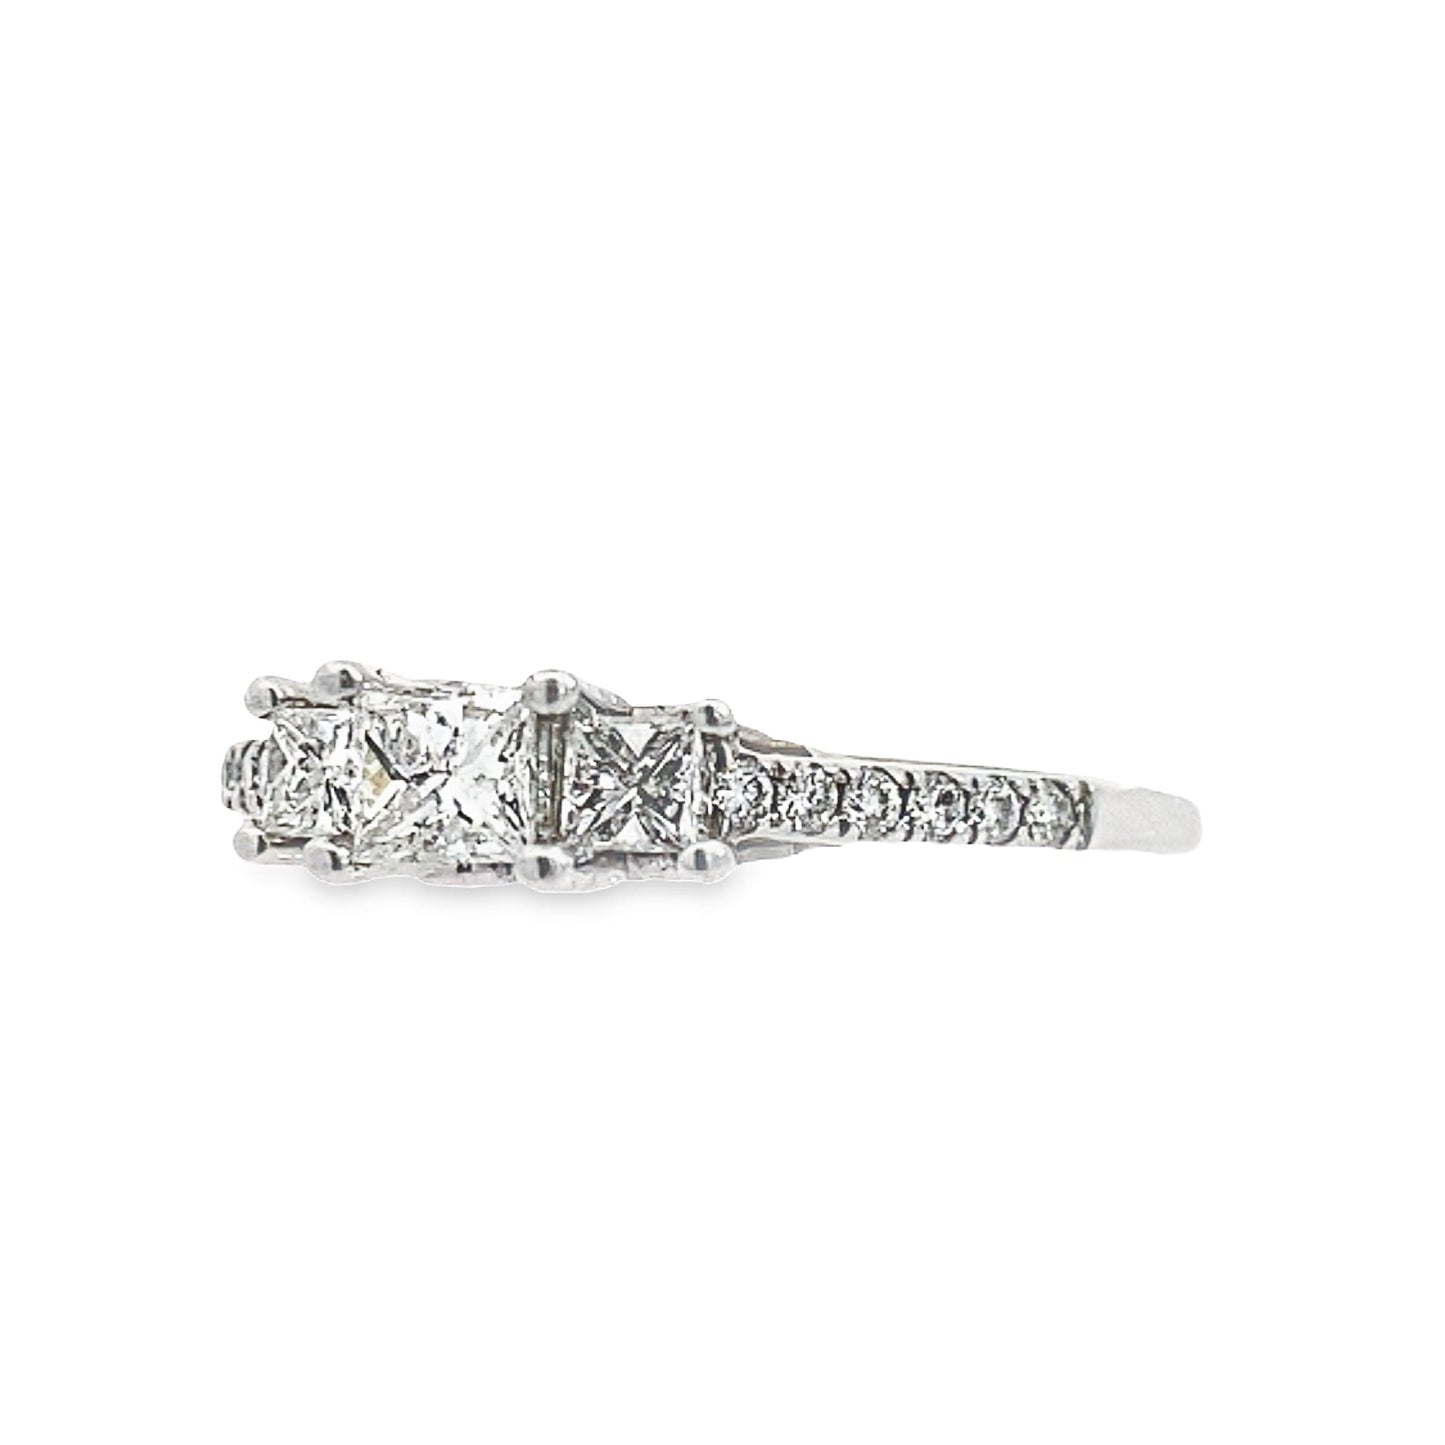 10K White Gold Diamond Engagement Ring Size 6.5 1.1Dwt